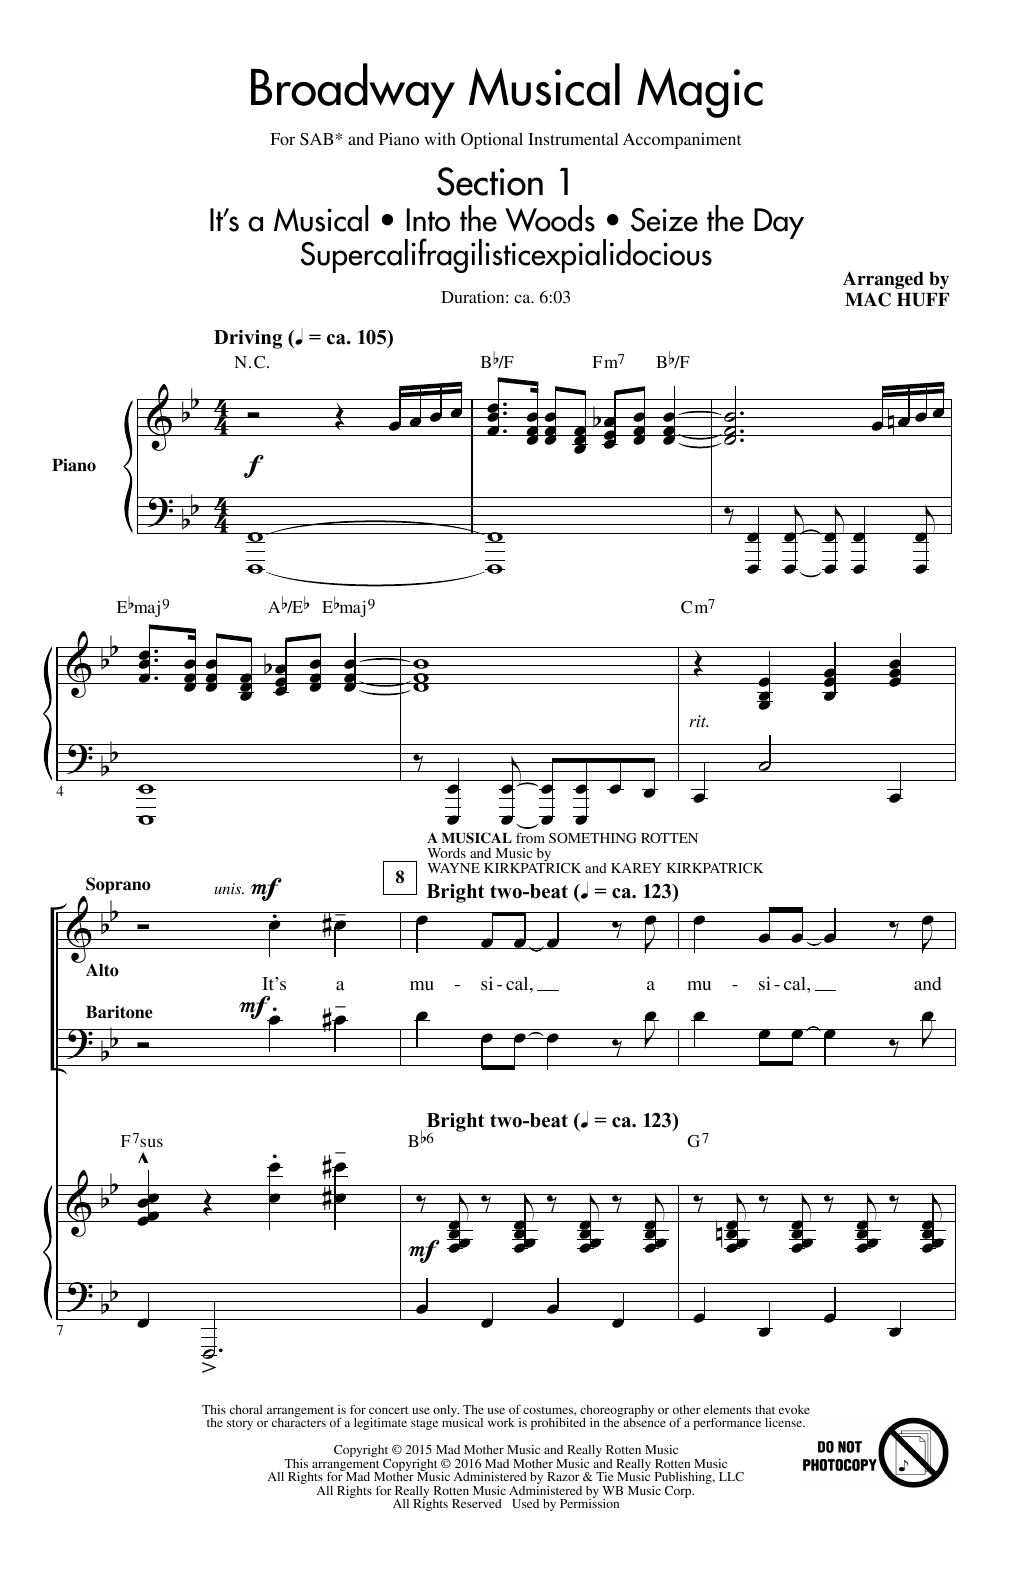 Mac Huff Broadway Musical Magic Sheet Music Notes & Chords for 2-Part Choir - Download or Print PDF